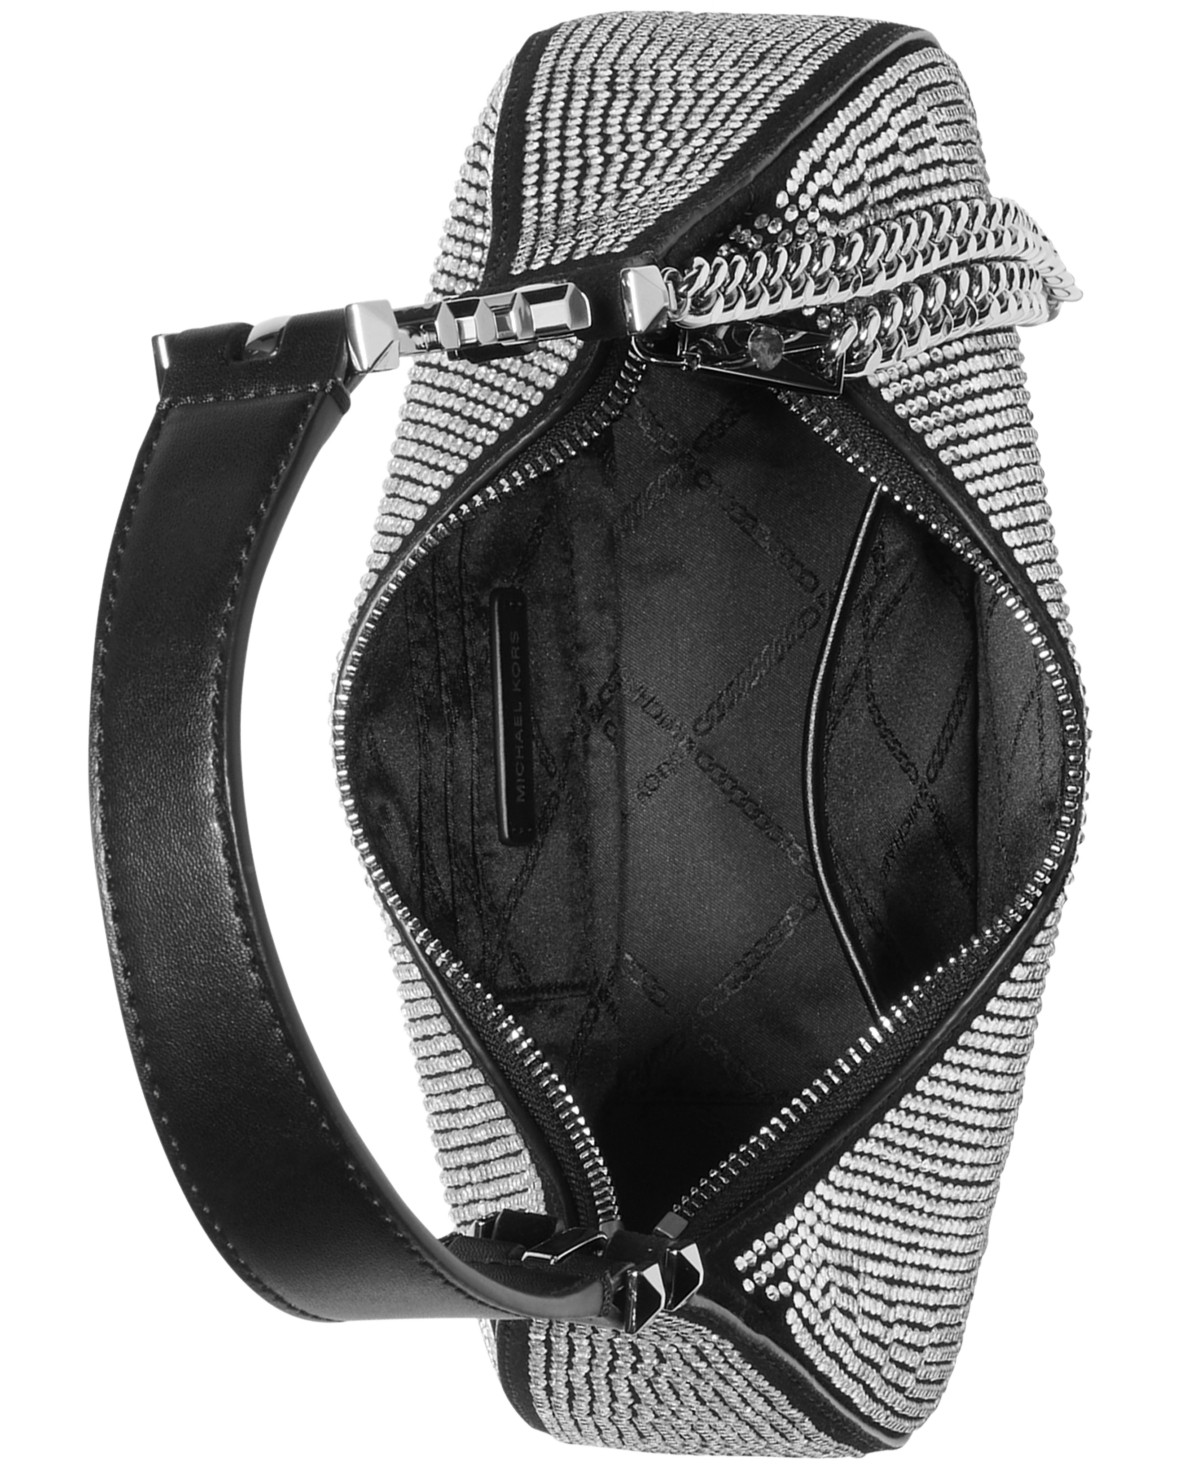 Michael Kors Piper Small Pouchette Shoulder Bag - Black